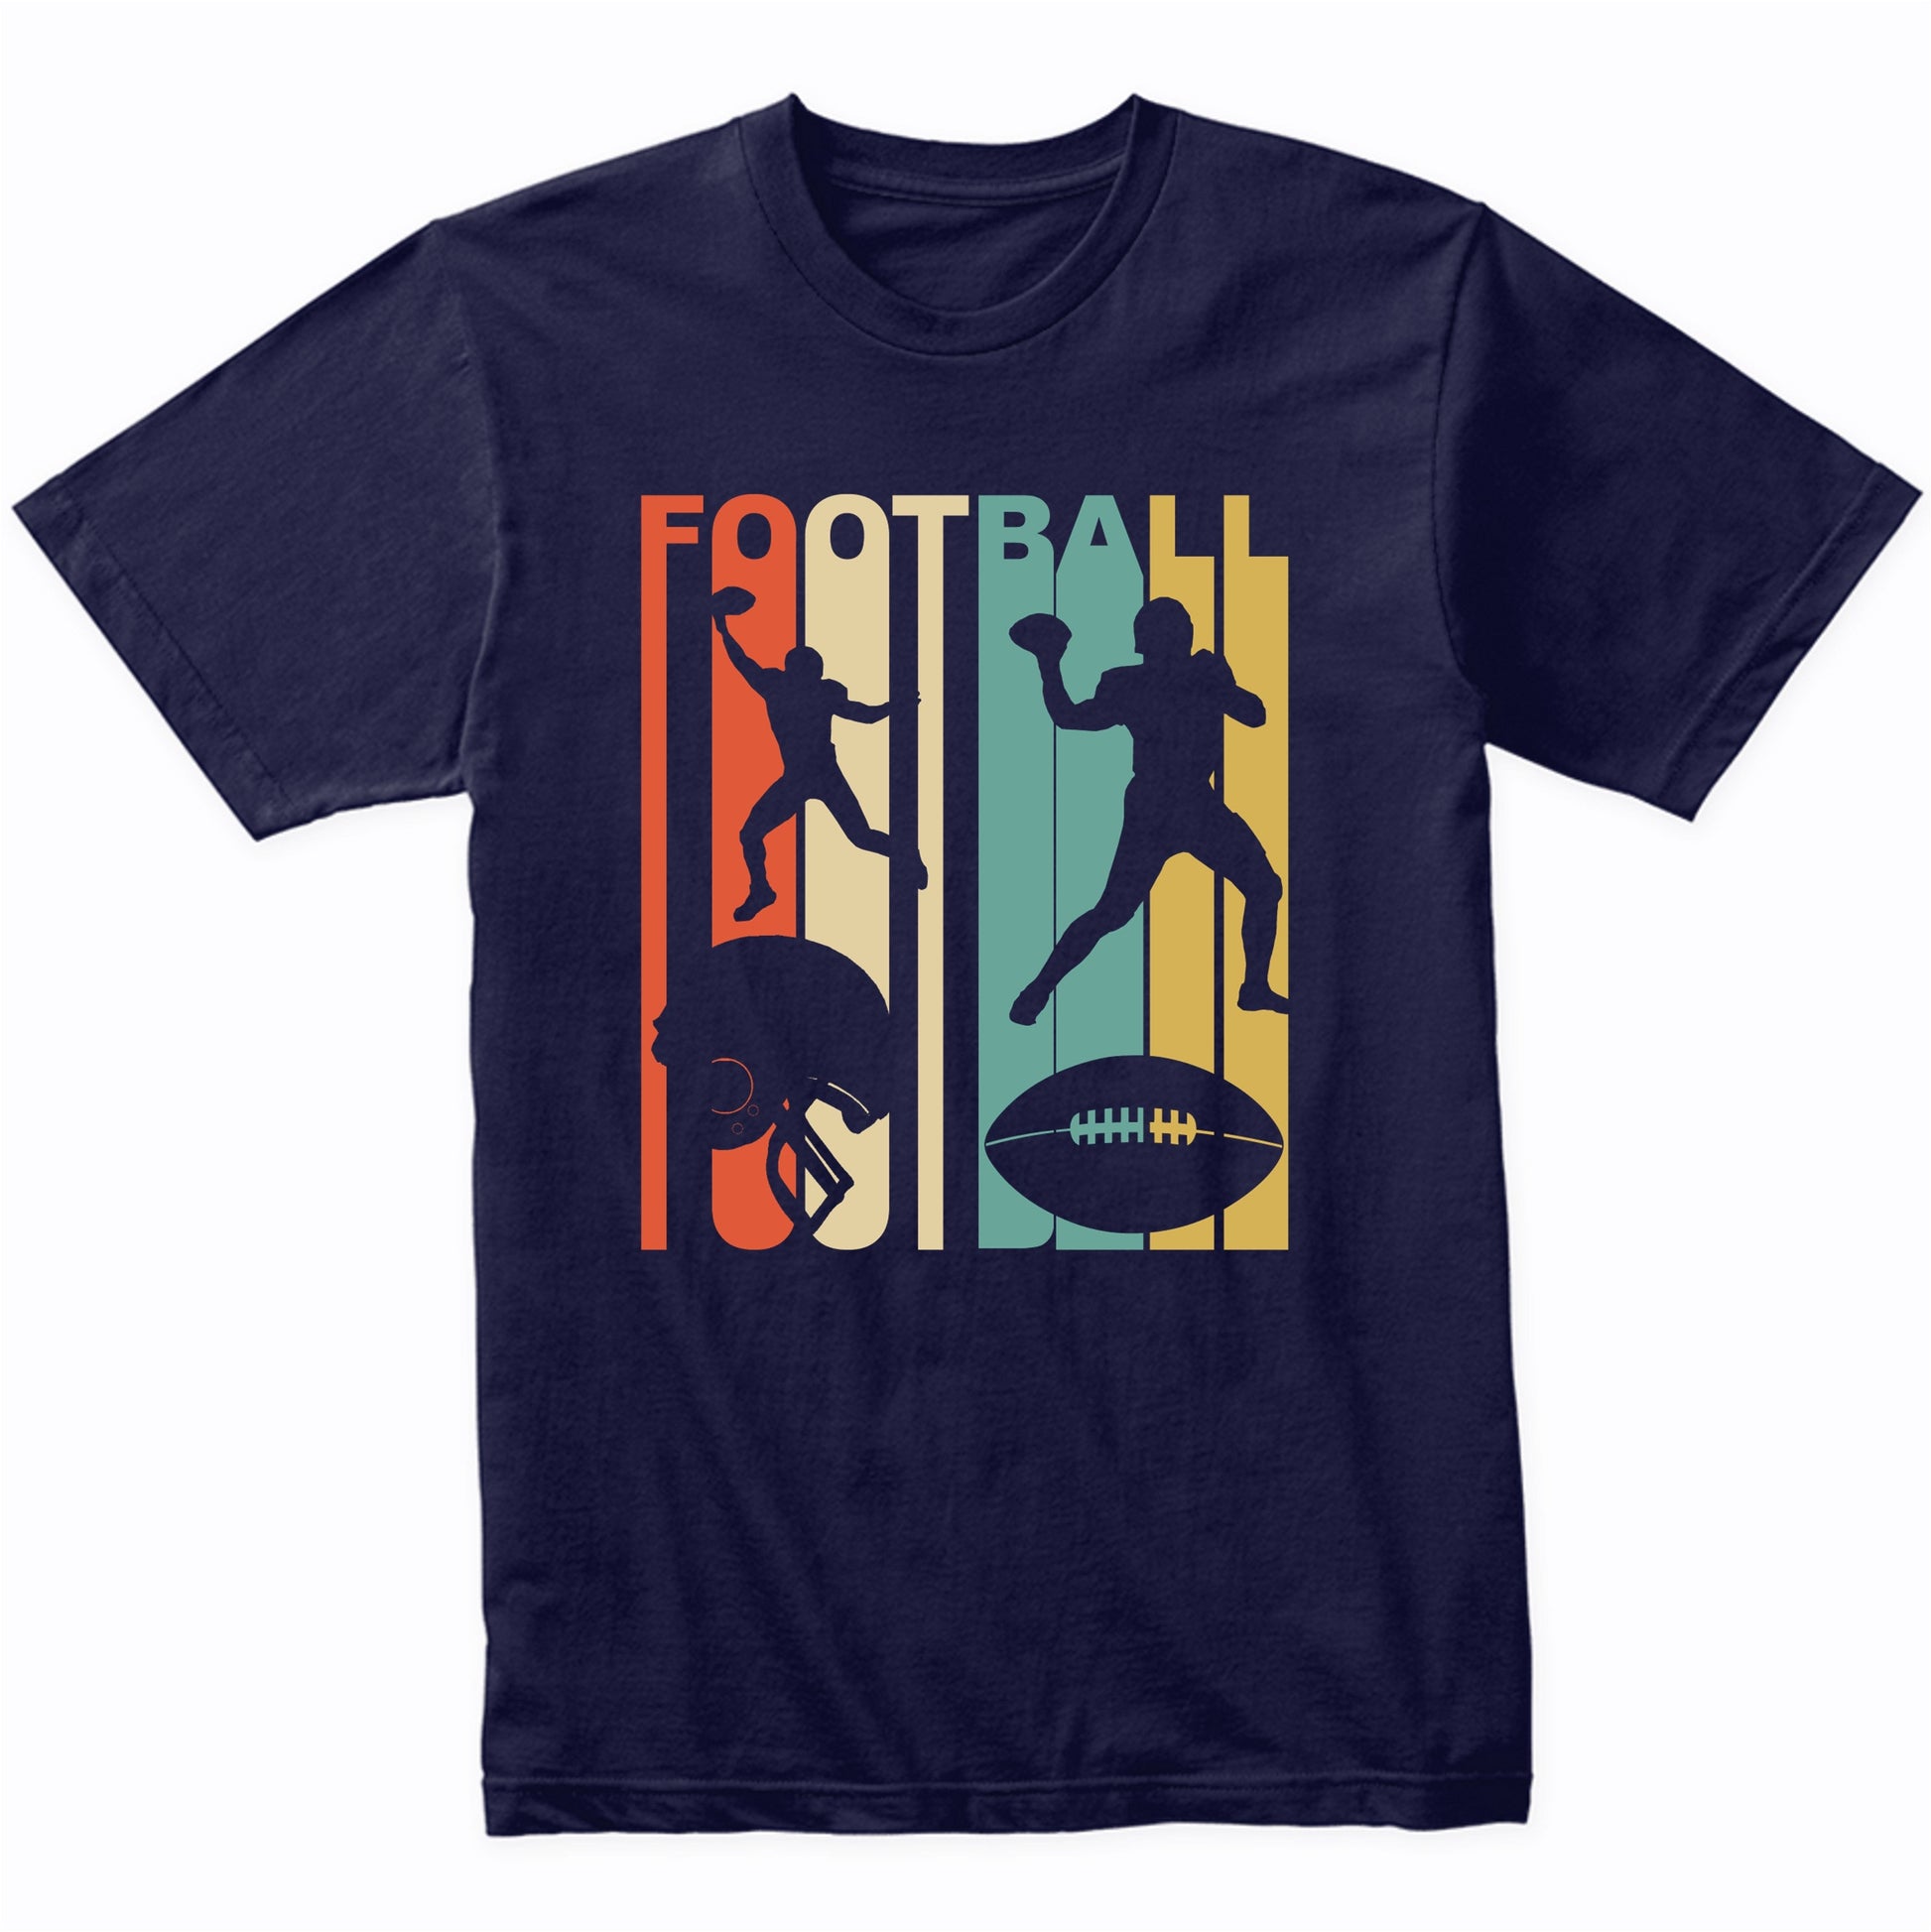 Vintage Retro 1970's Style Football T-Shirt